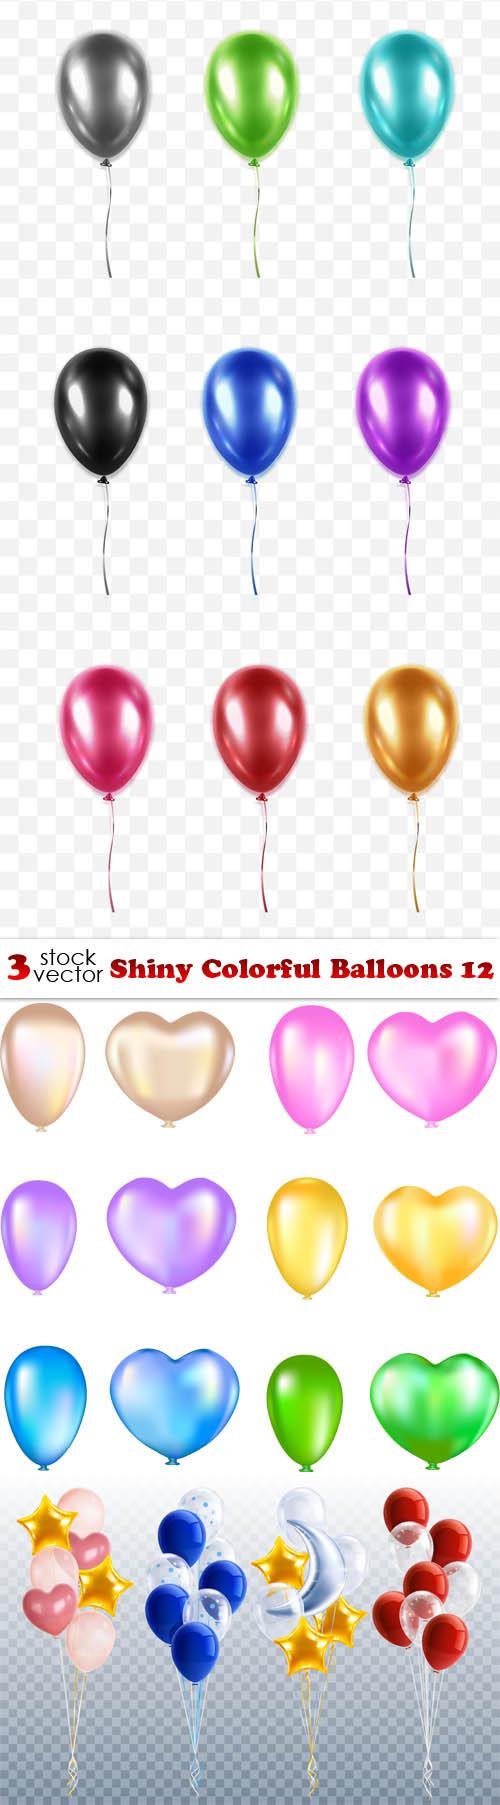 Shiny Colorful Balloons 12